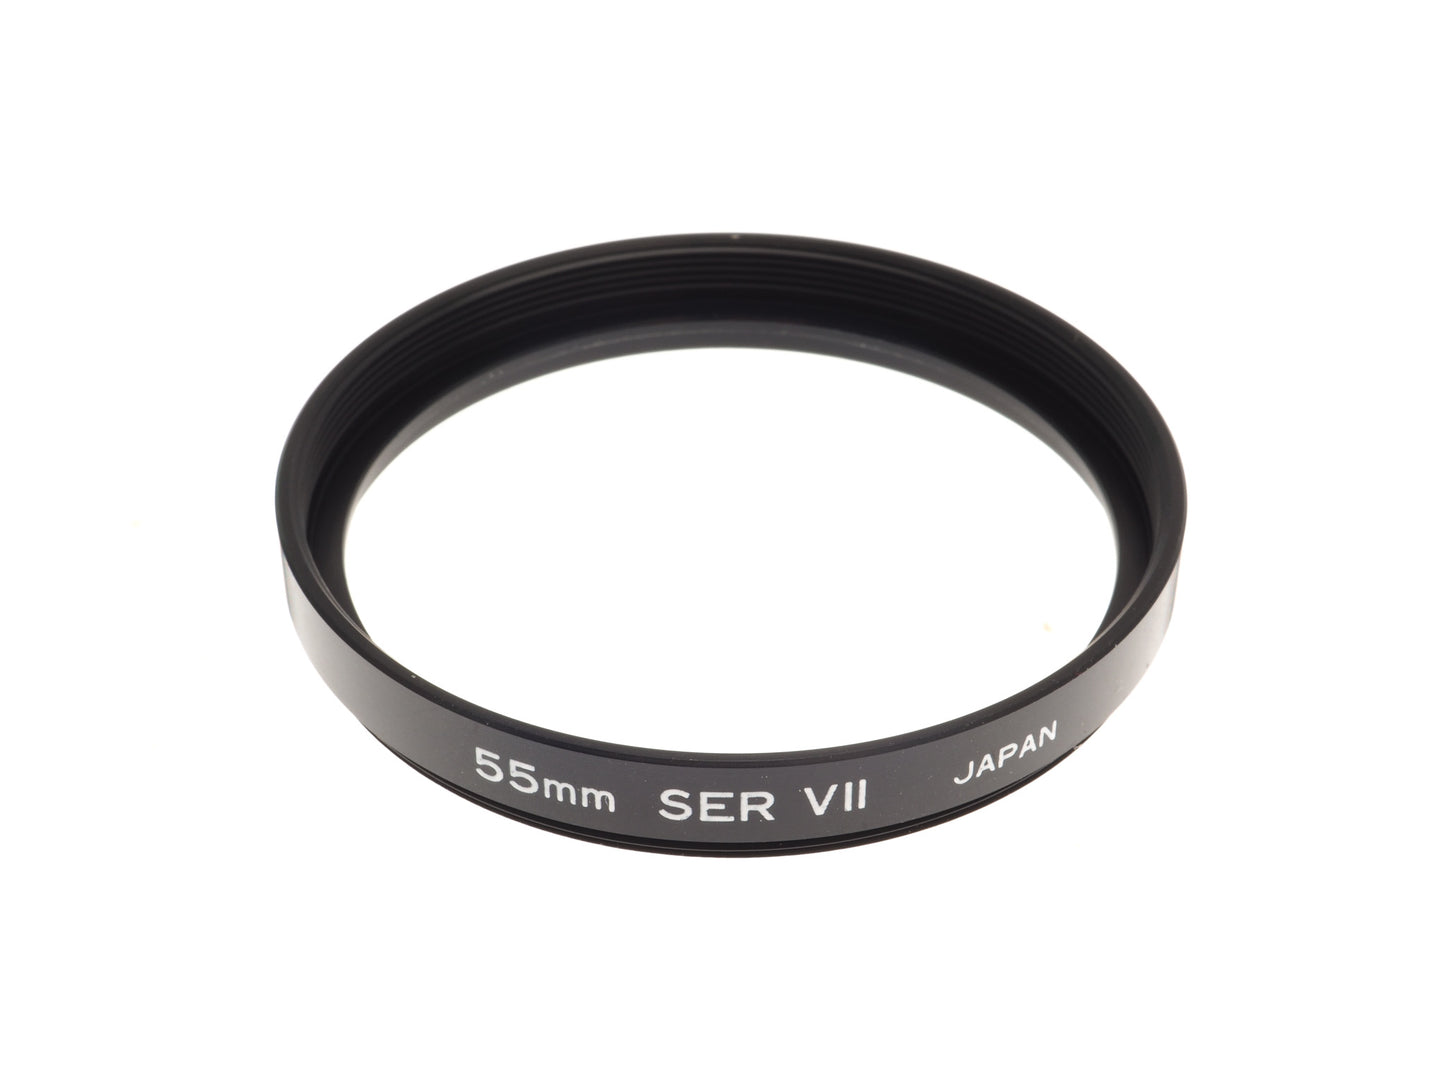 Generic 55mm - Series VII Adapter Ring